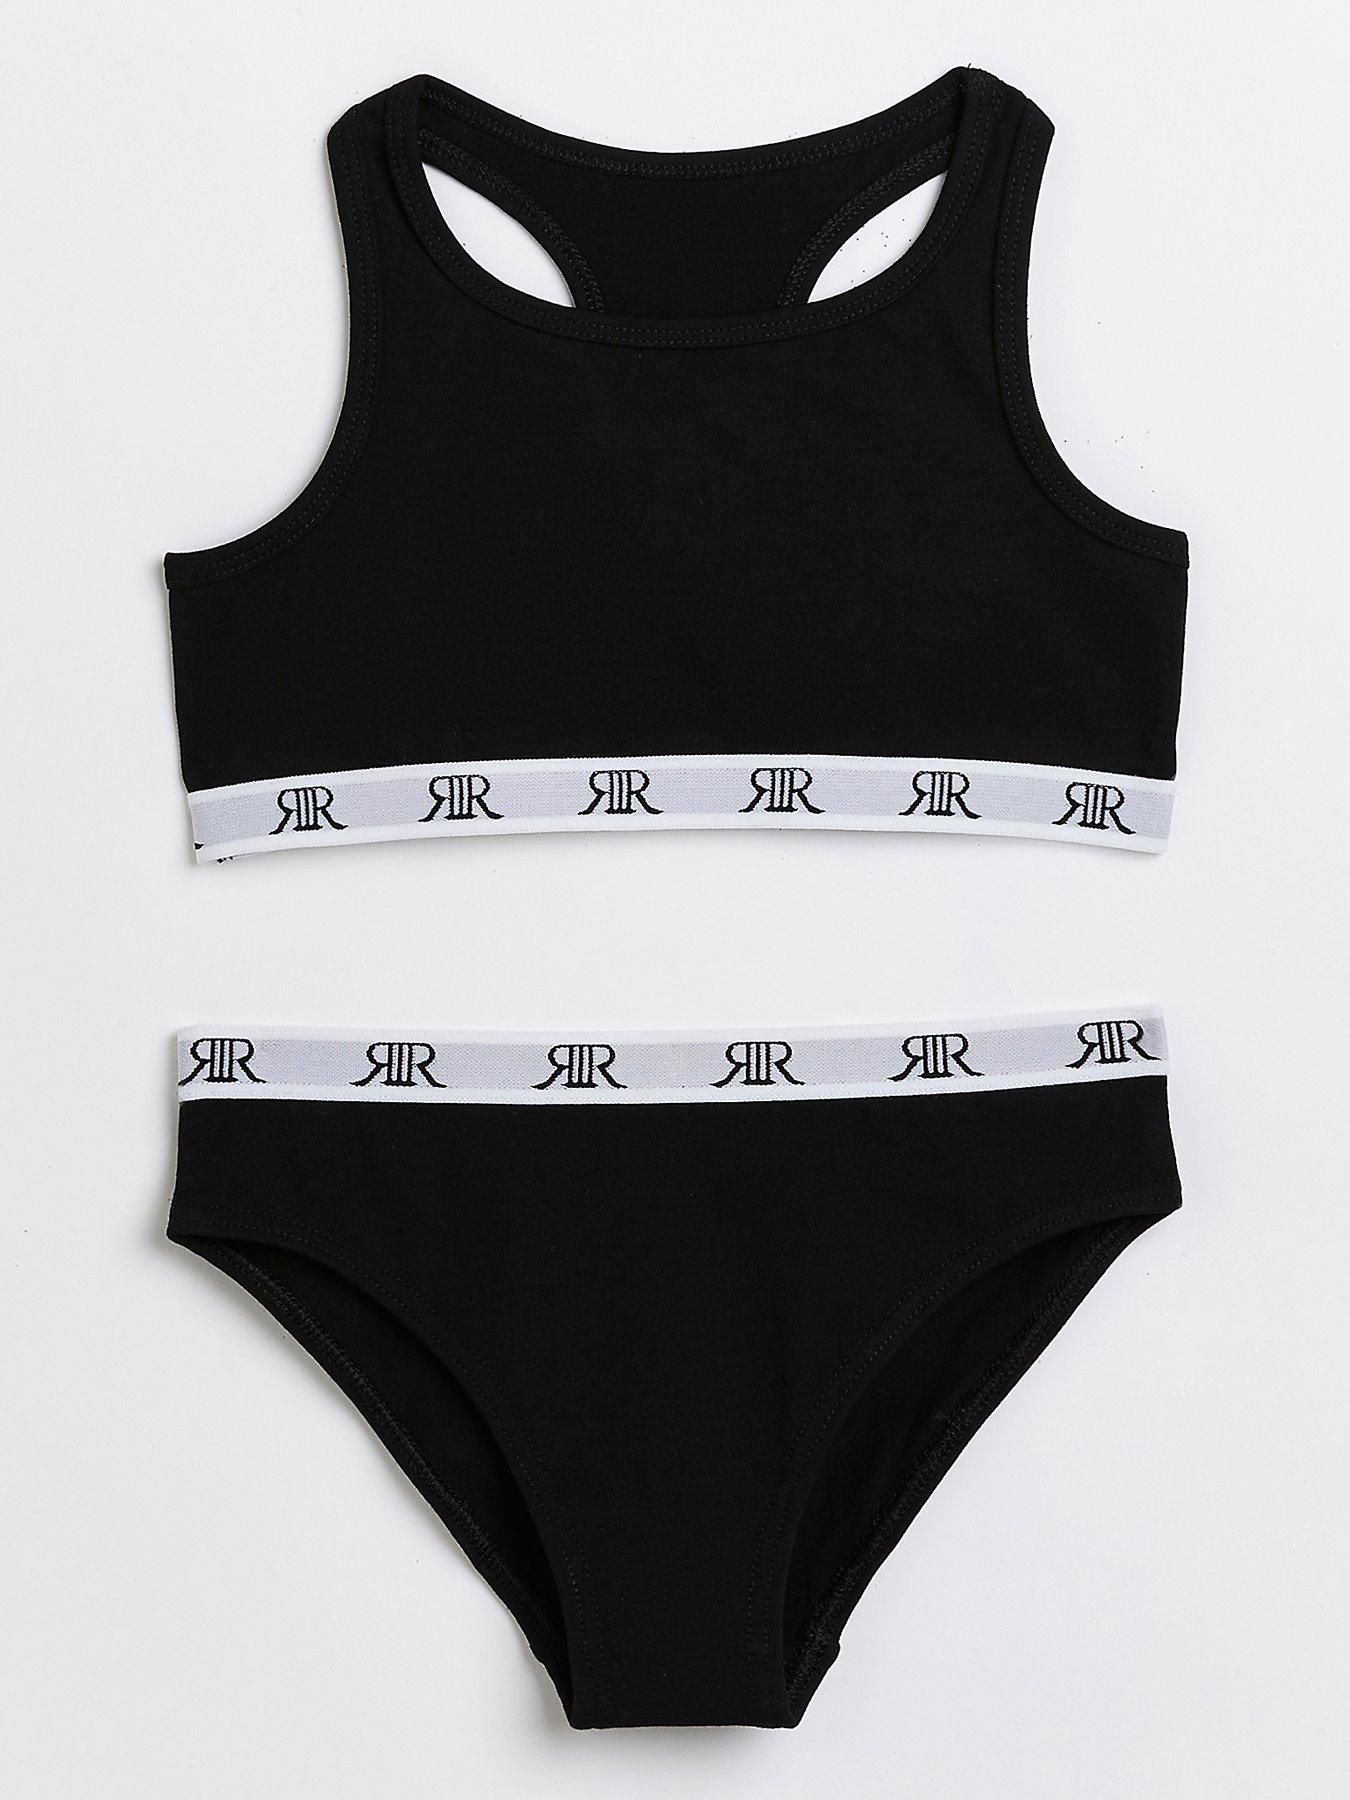 Calvin Klein Girls 2 Pack Bikini Briefs - White/Black